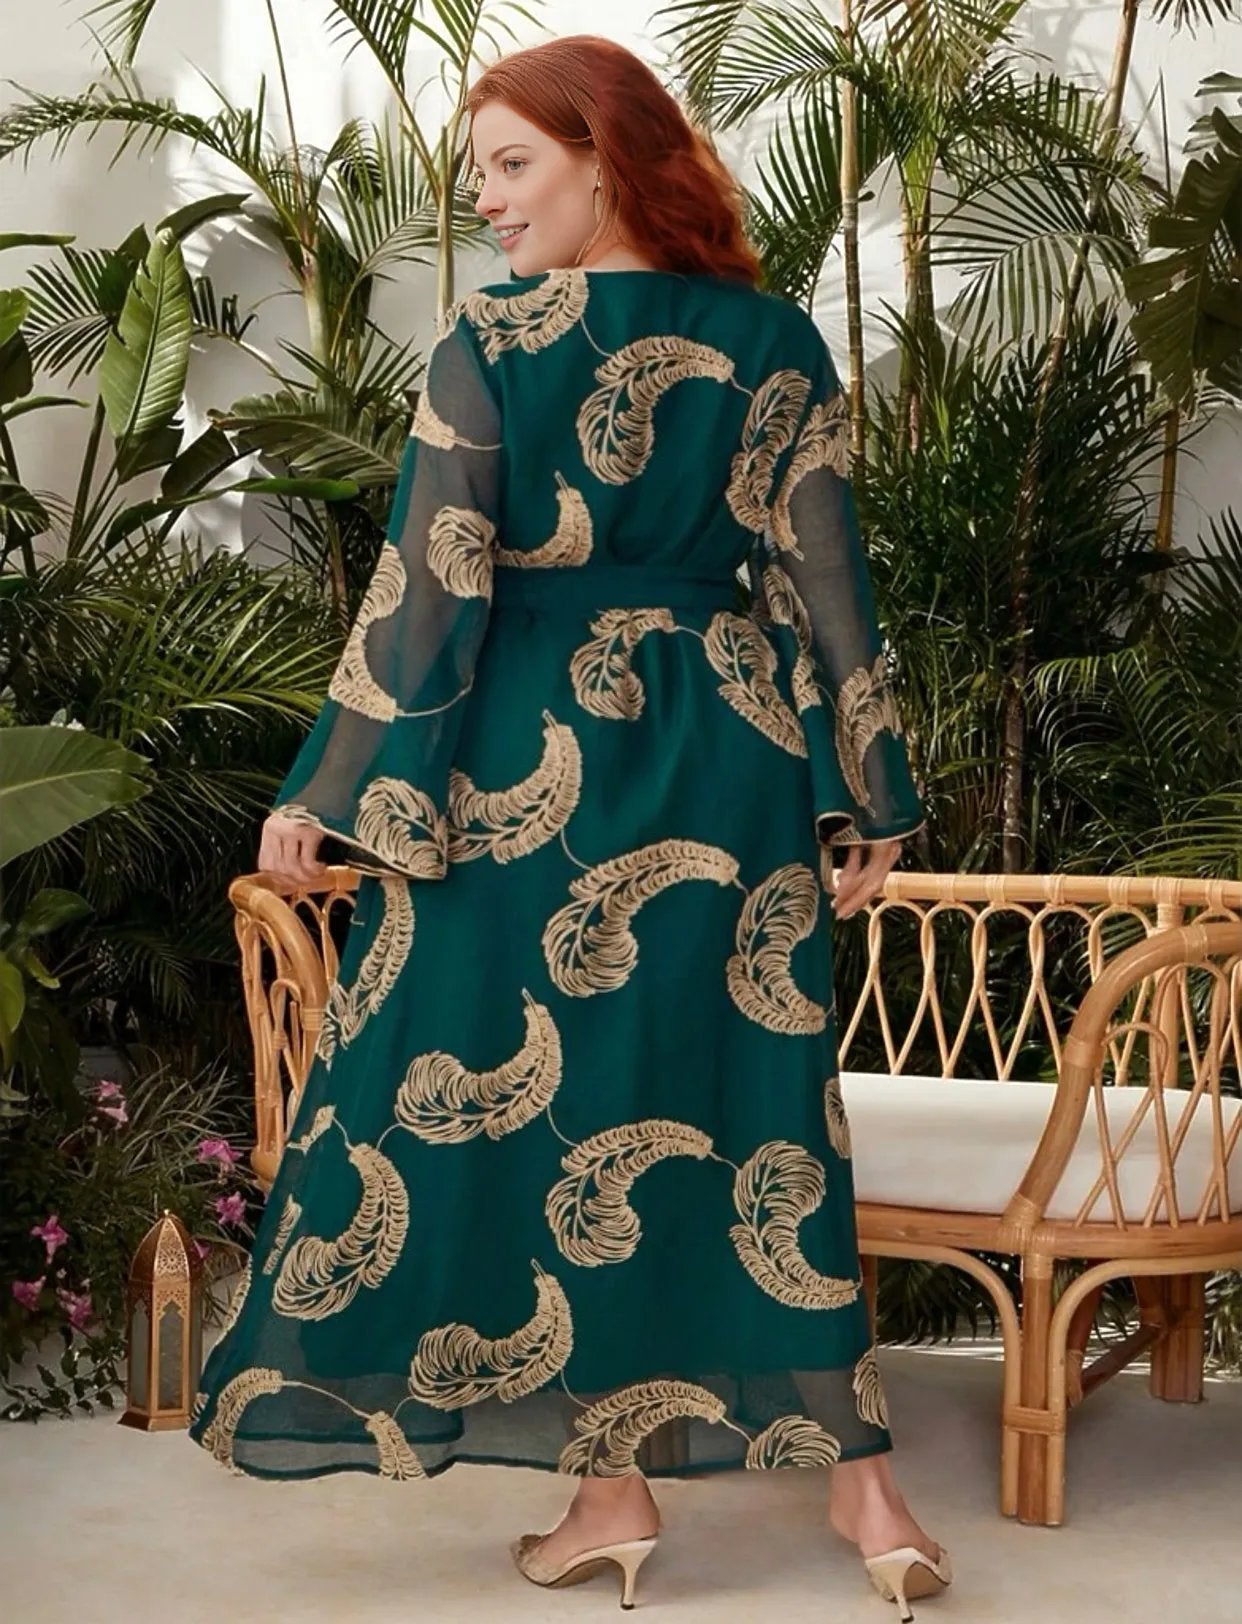 Feather Print Green Flow Dress, Sizes 0XL - 4XL (US 12 - 20)